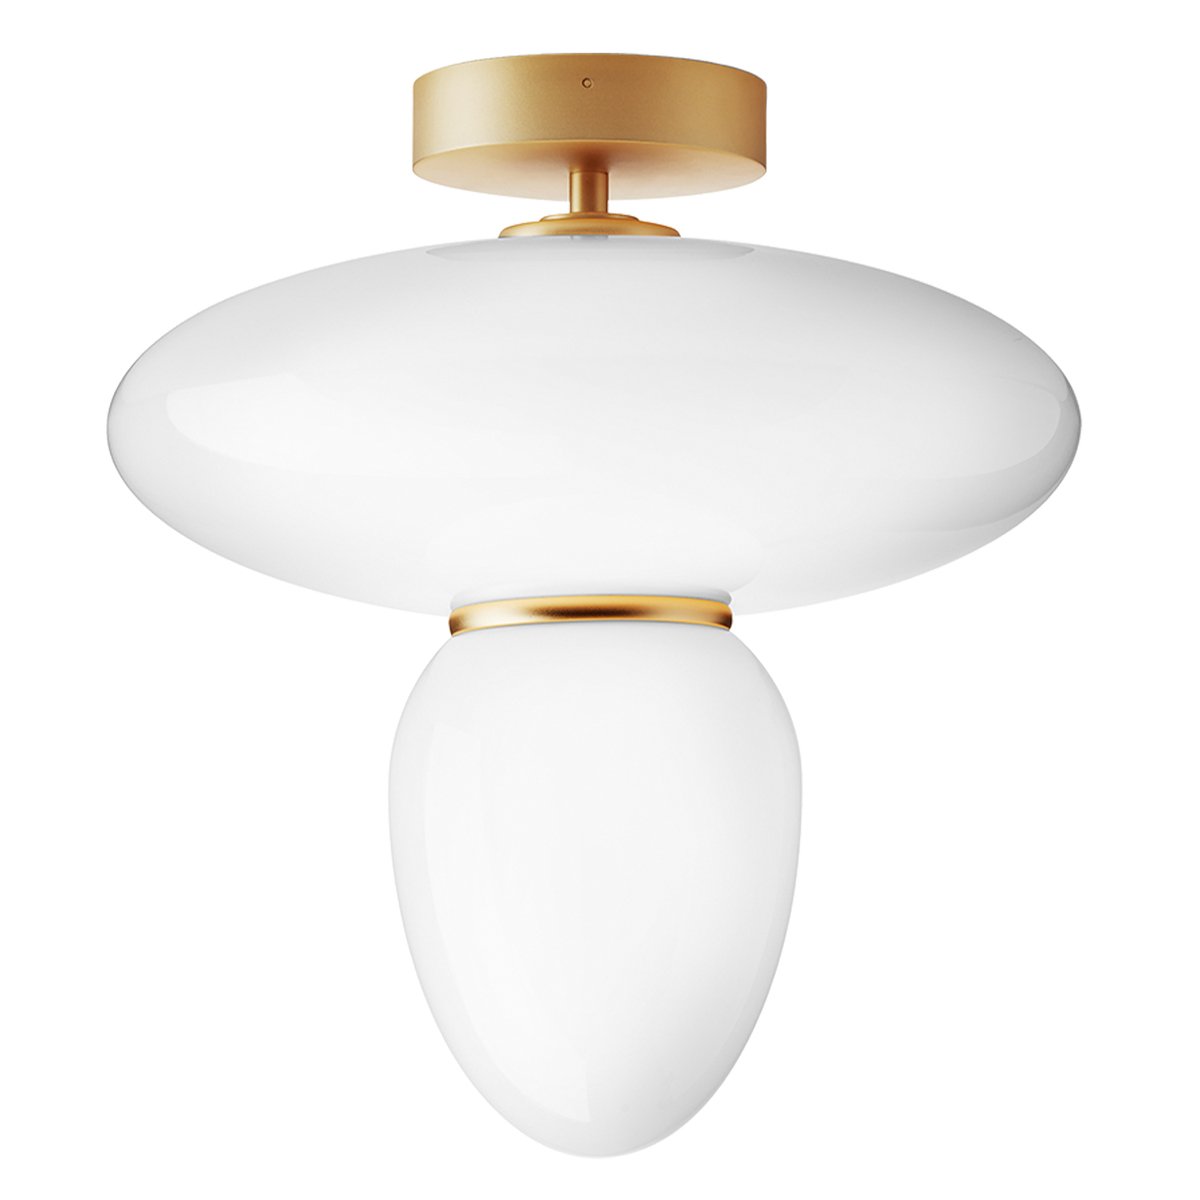 Nuura Rizzatto 42 Ceiling Lamp, Brass - Opal White